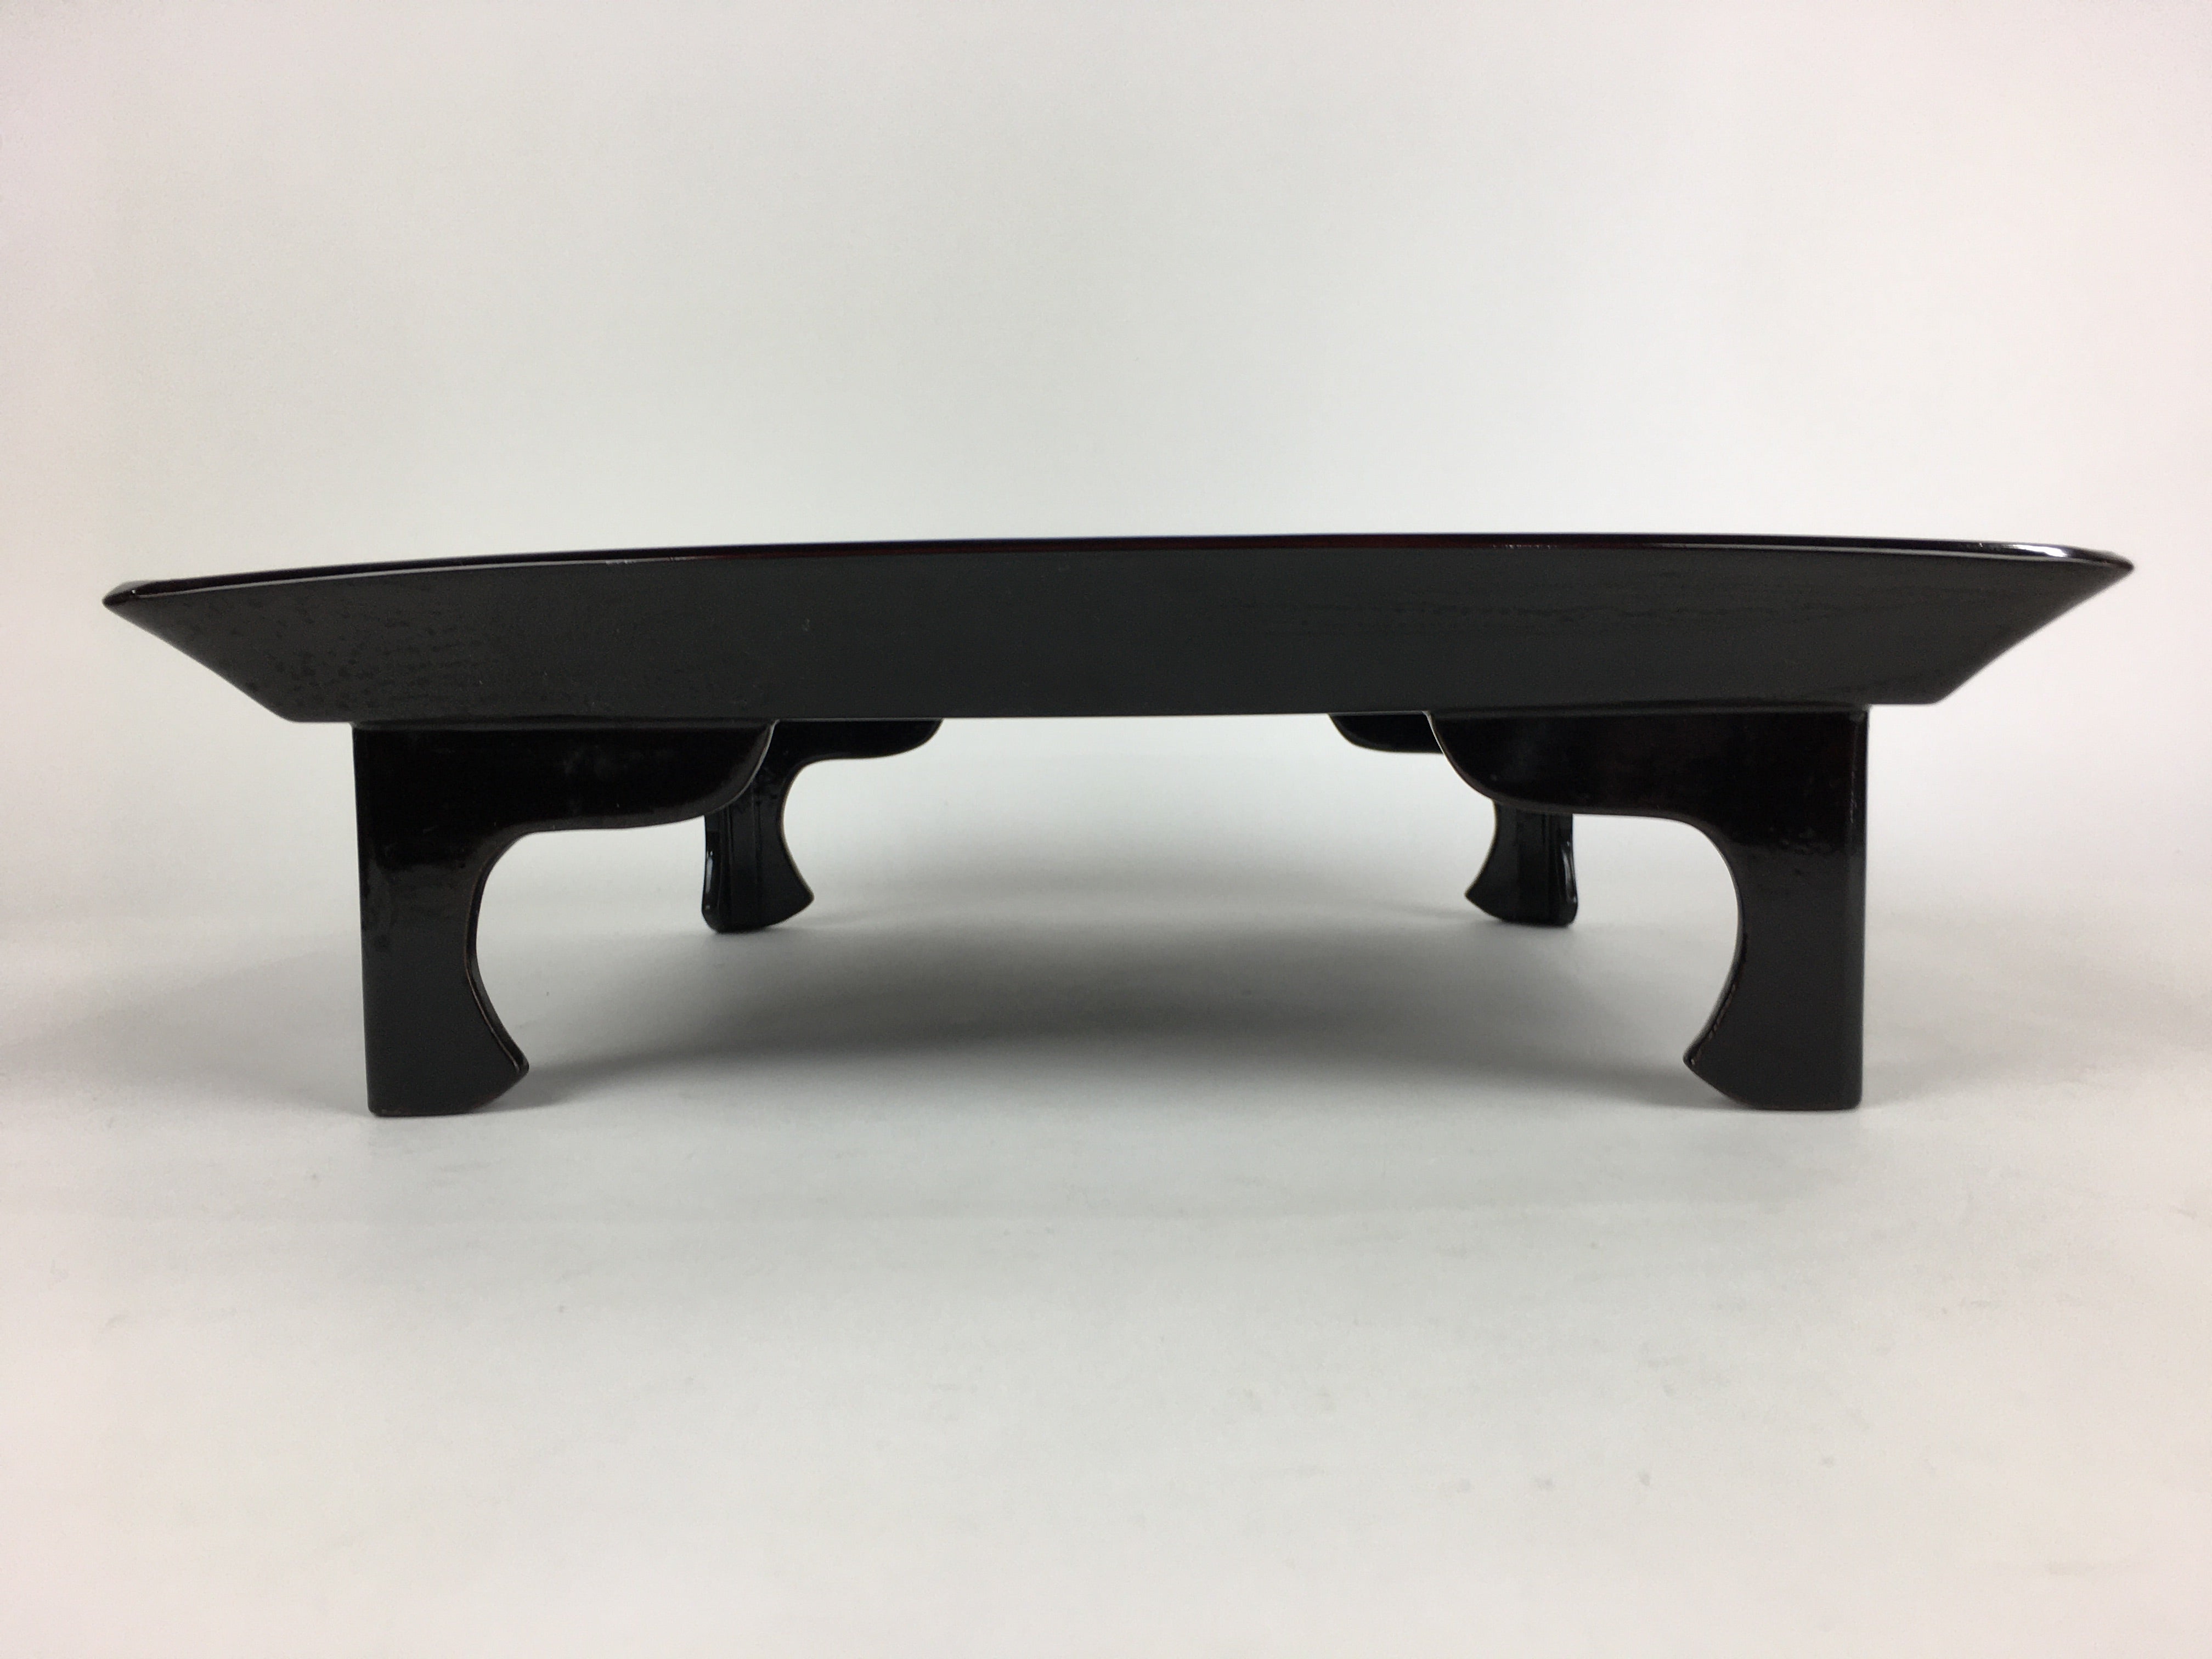 Japanese Wooden Legged Tray Lacquered Table Vtg Ozen Black Nurimono UR756